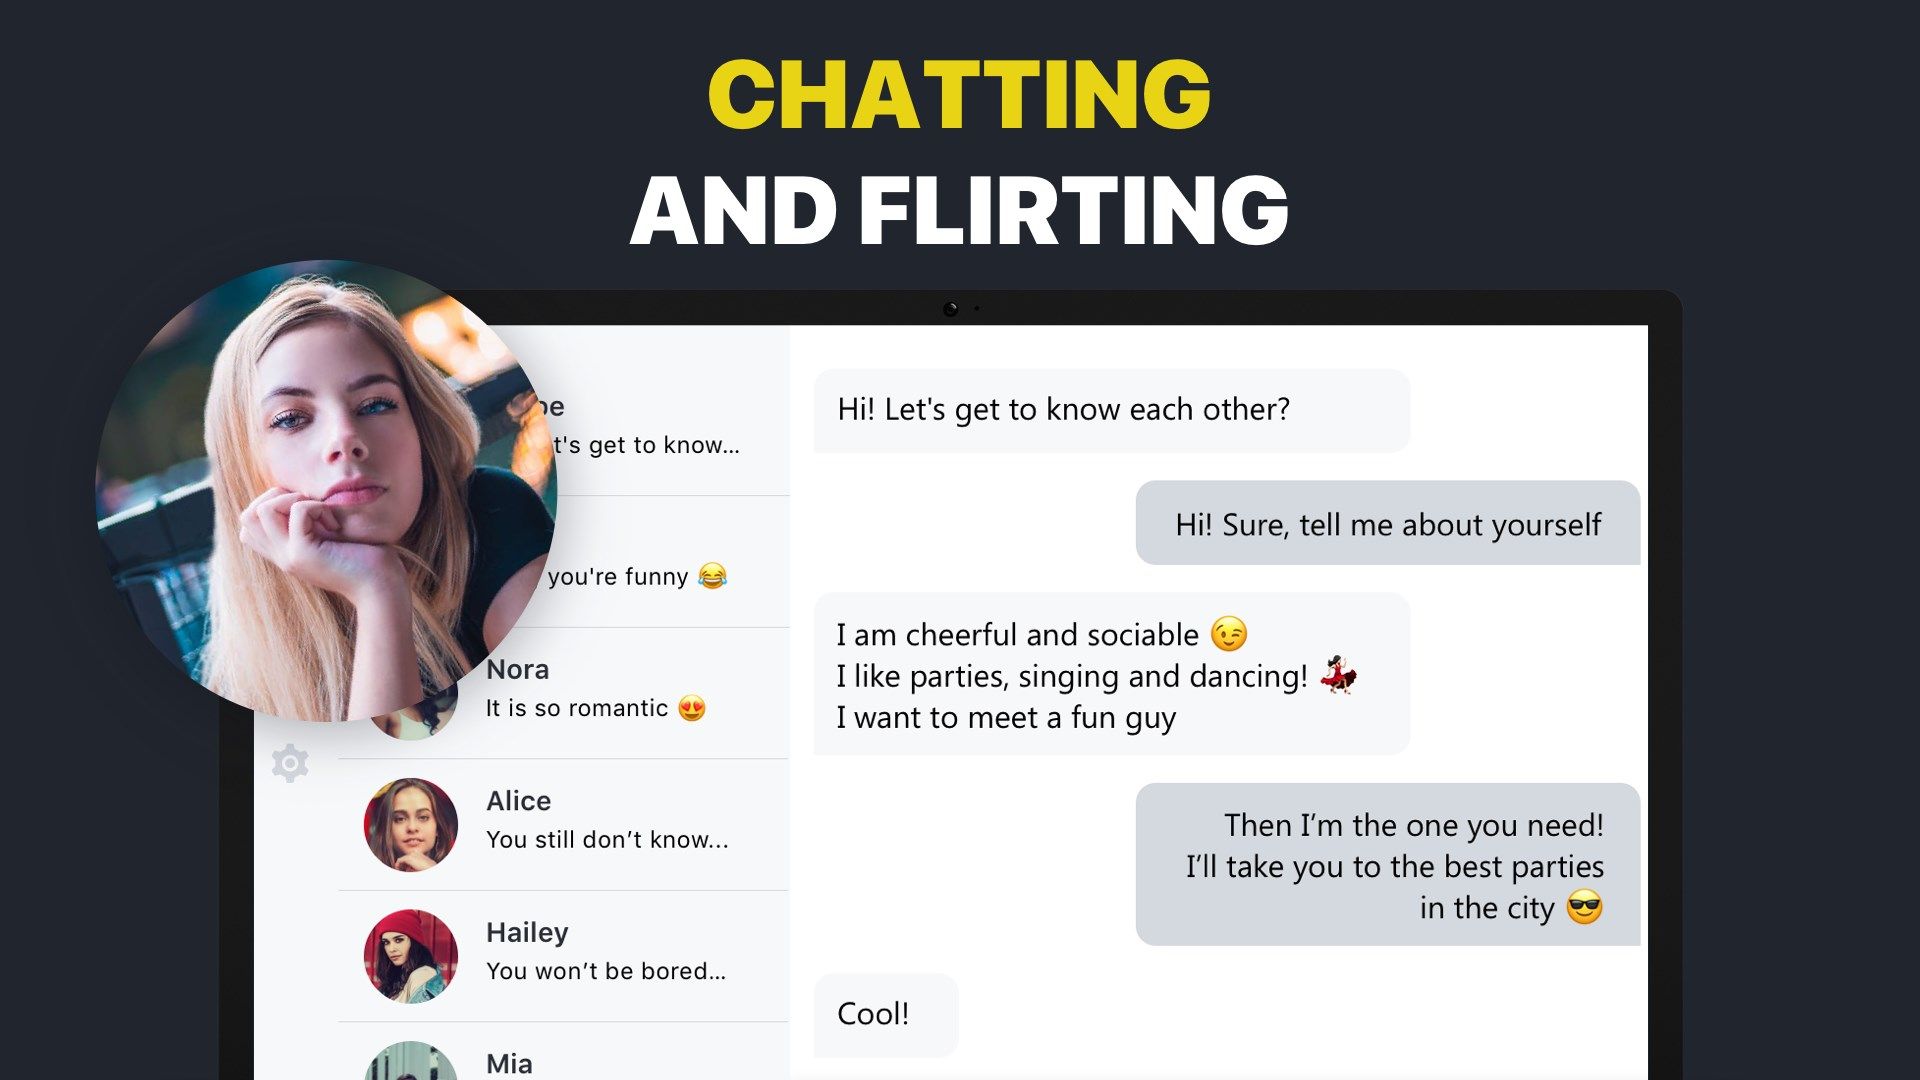 My Virtual Girl: Girlfriend Chatbot